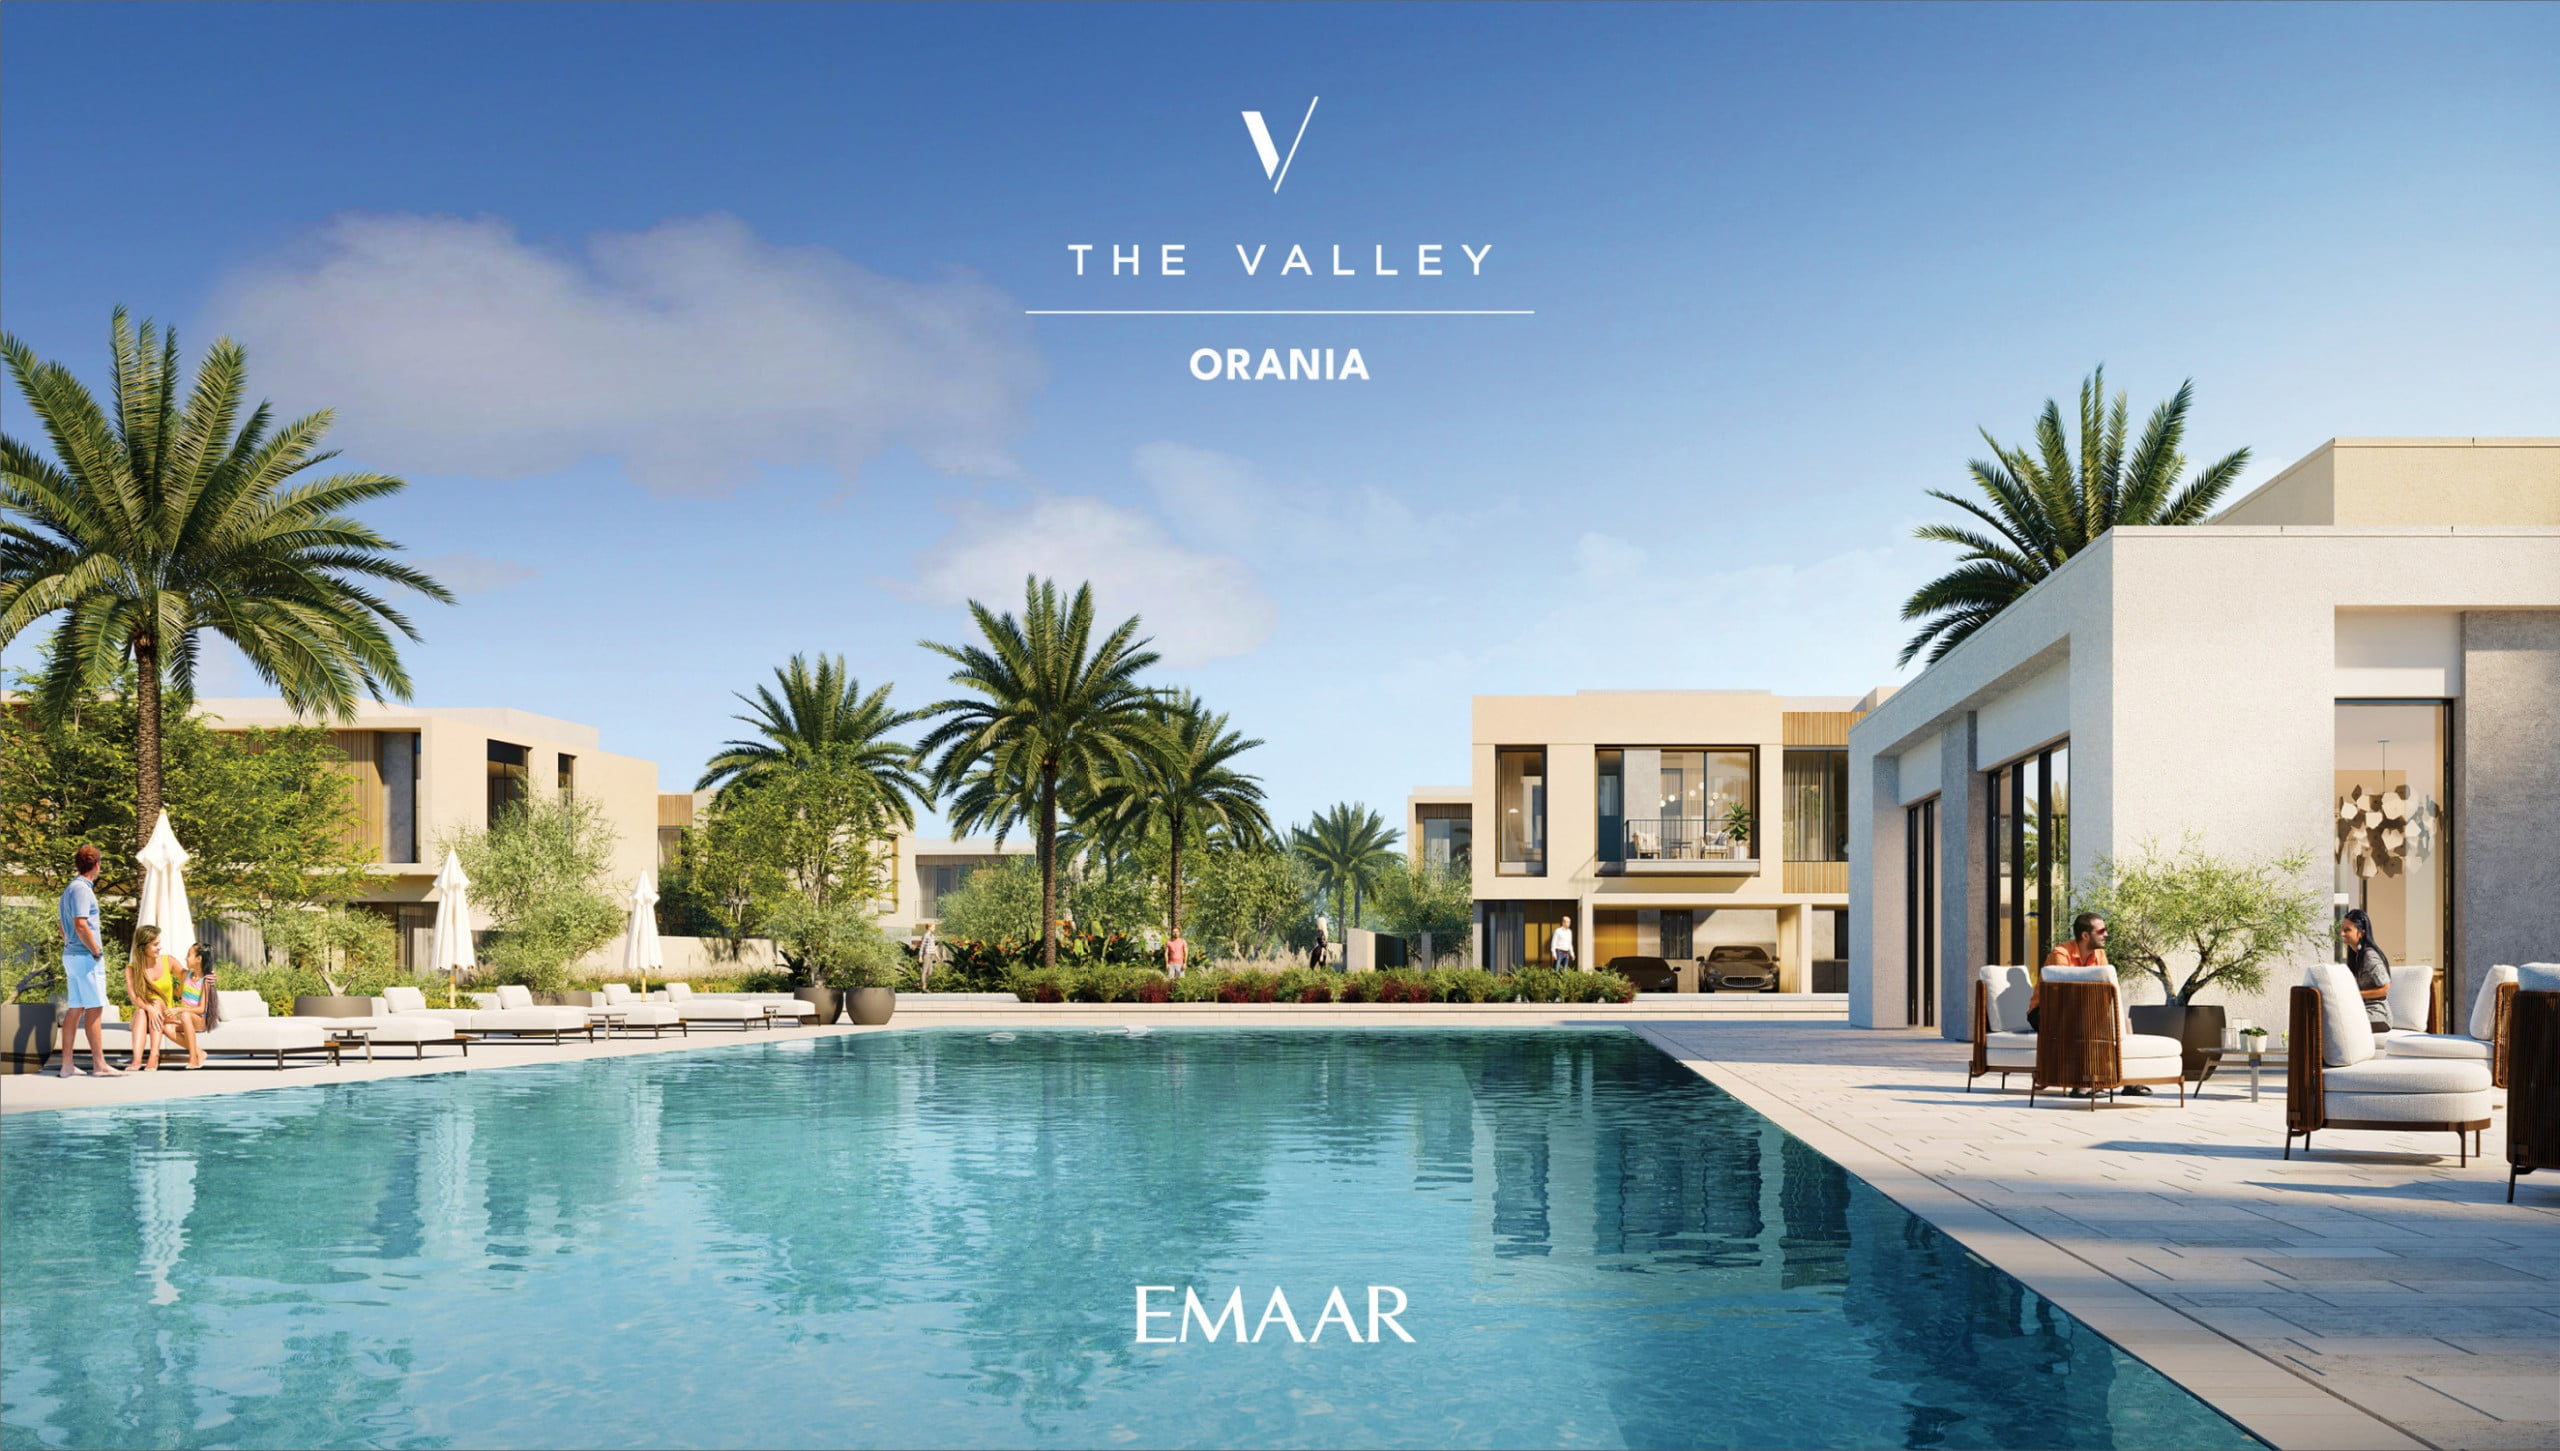 ORANIA THE VALLEY EMAAR 03 scaled - Immobilier Dubai